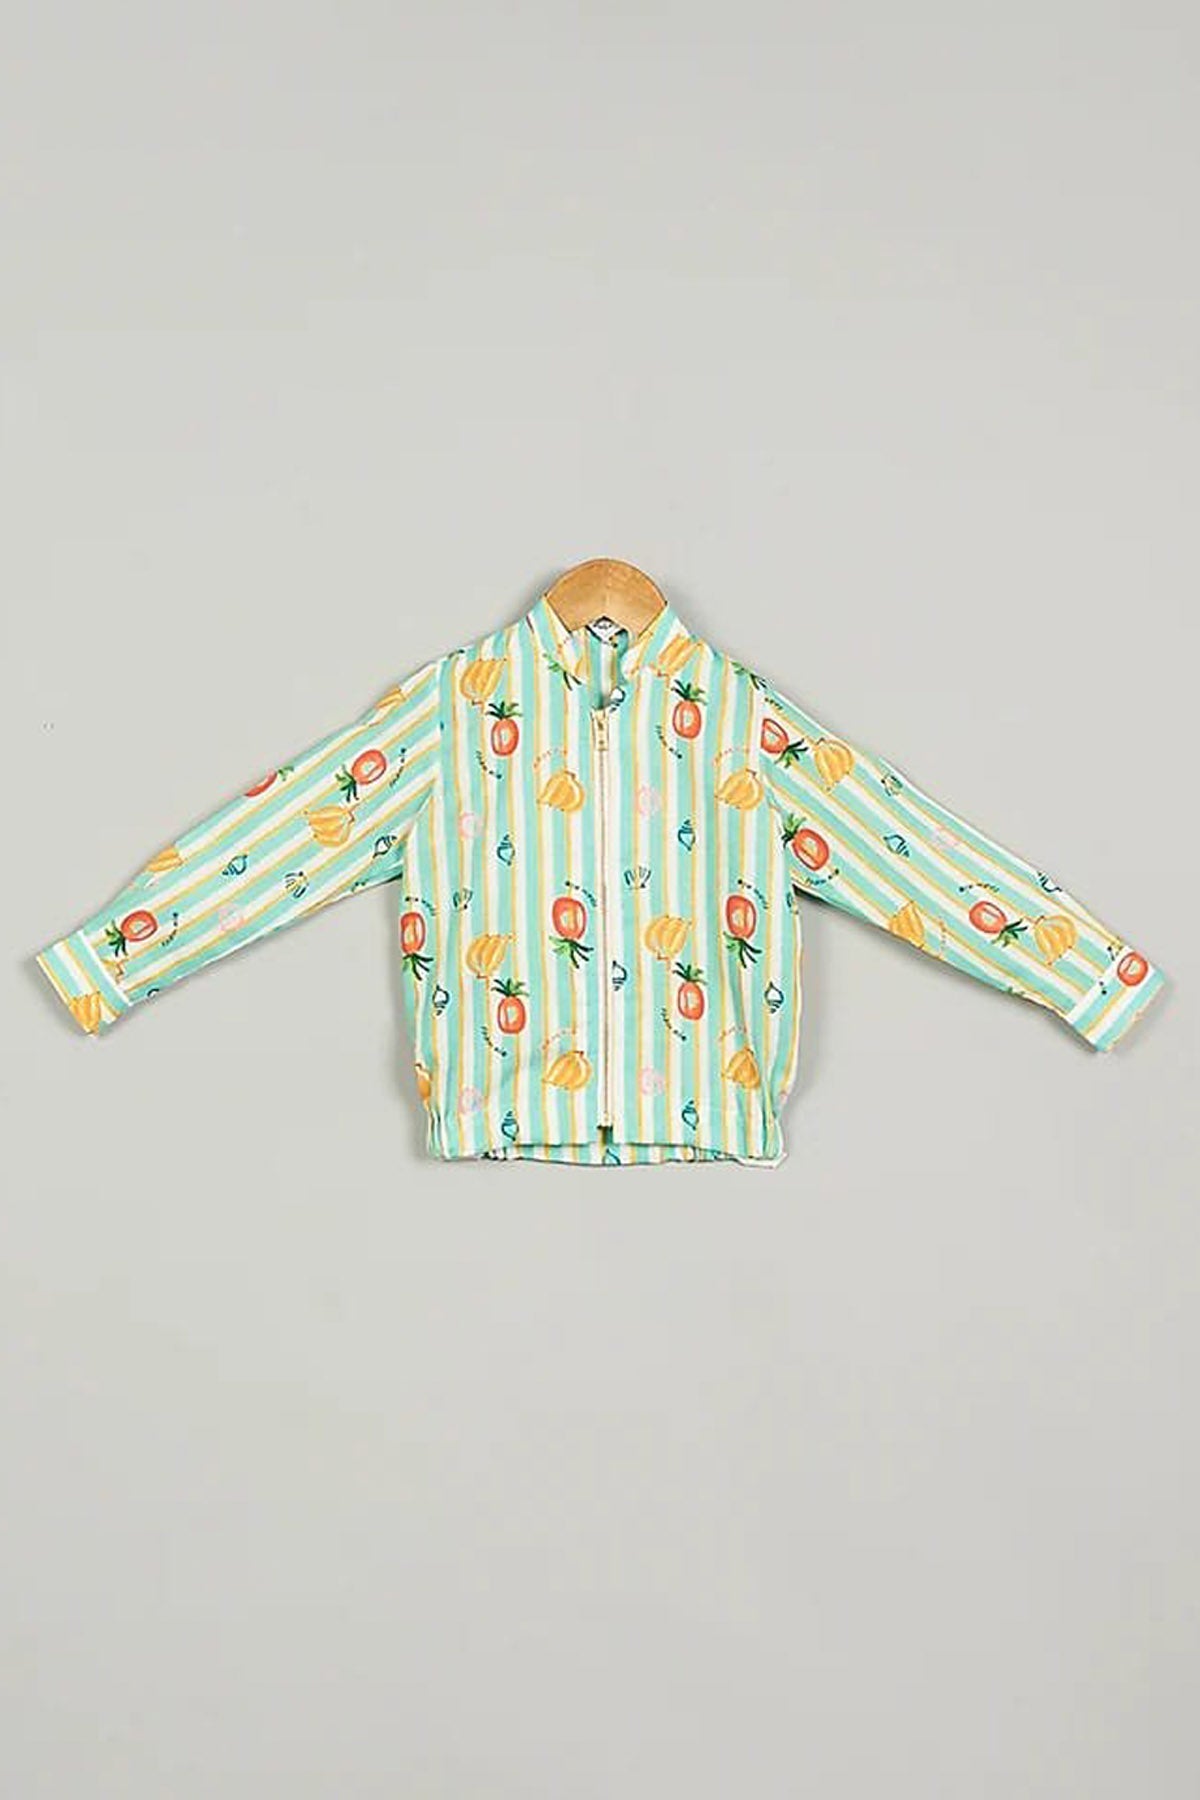 Designer Little Brats Fruit Printed Cotton Jacket For Kids Available online at ScrollnShops